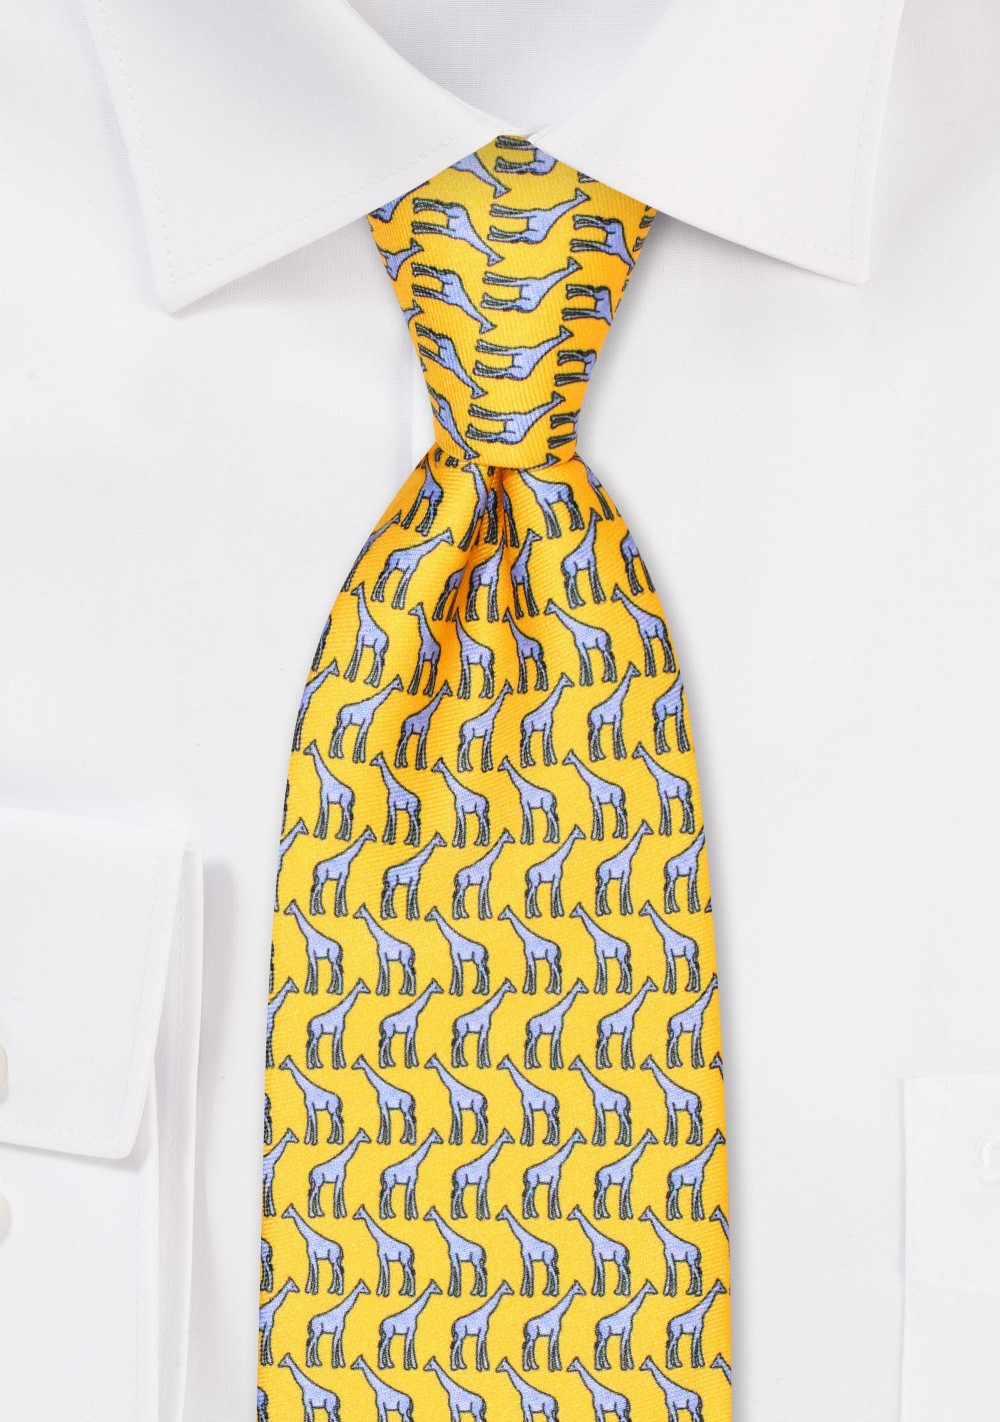 Yellow Giraffe Print Tie in XL